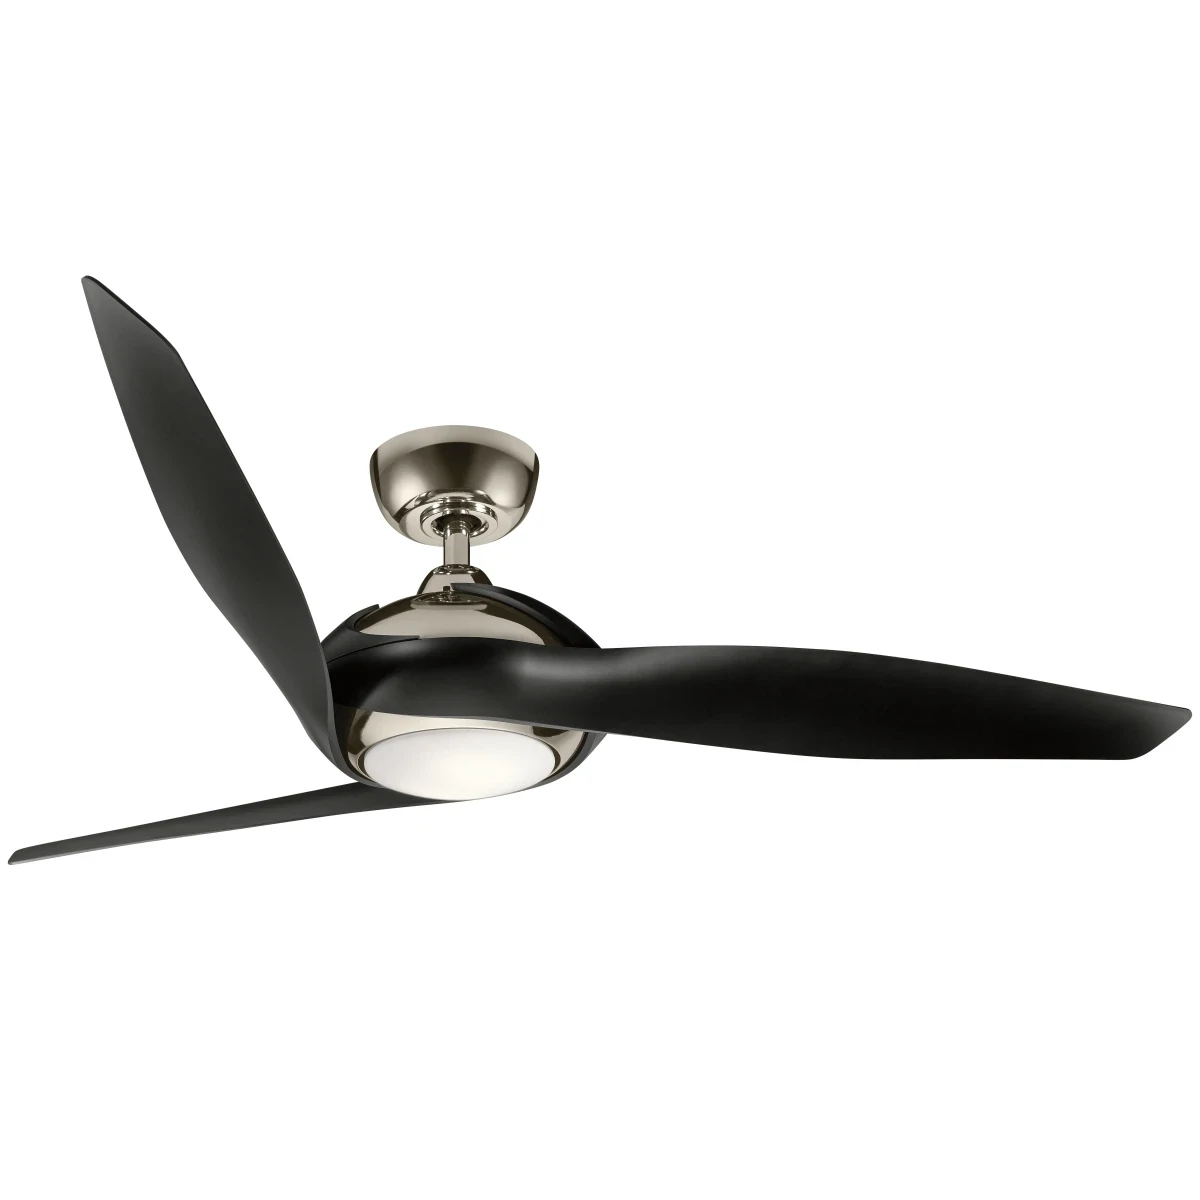 60" Zenith 3-Blade Indoor Ceiling Fan Polished Nickel with Satin Black Blades 3000K 60 W x 14 H 6225 CFM